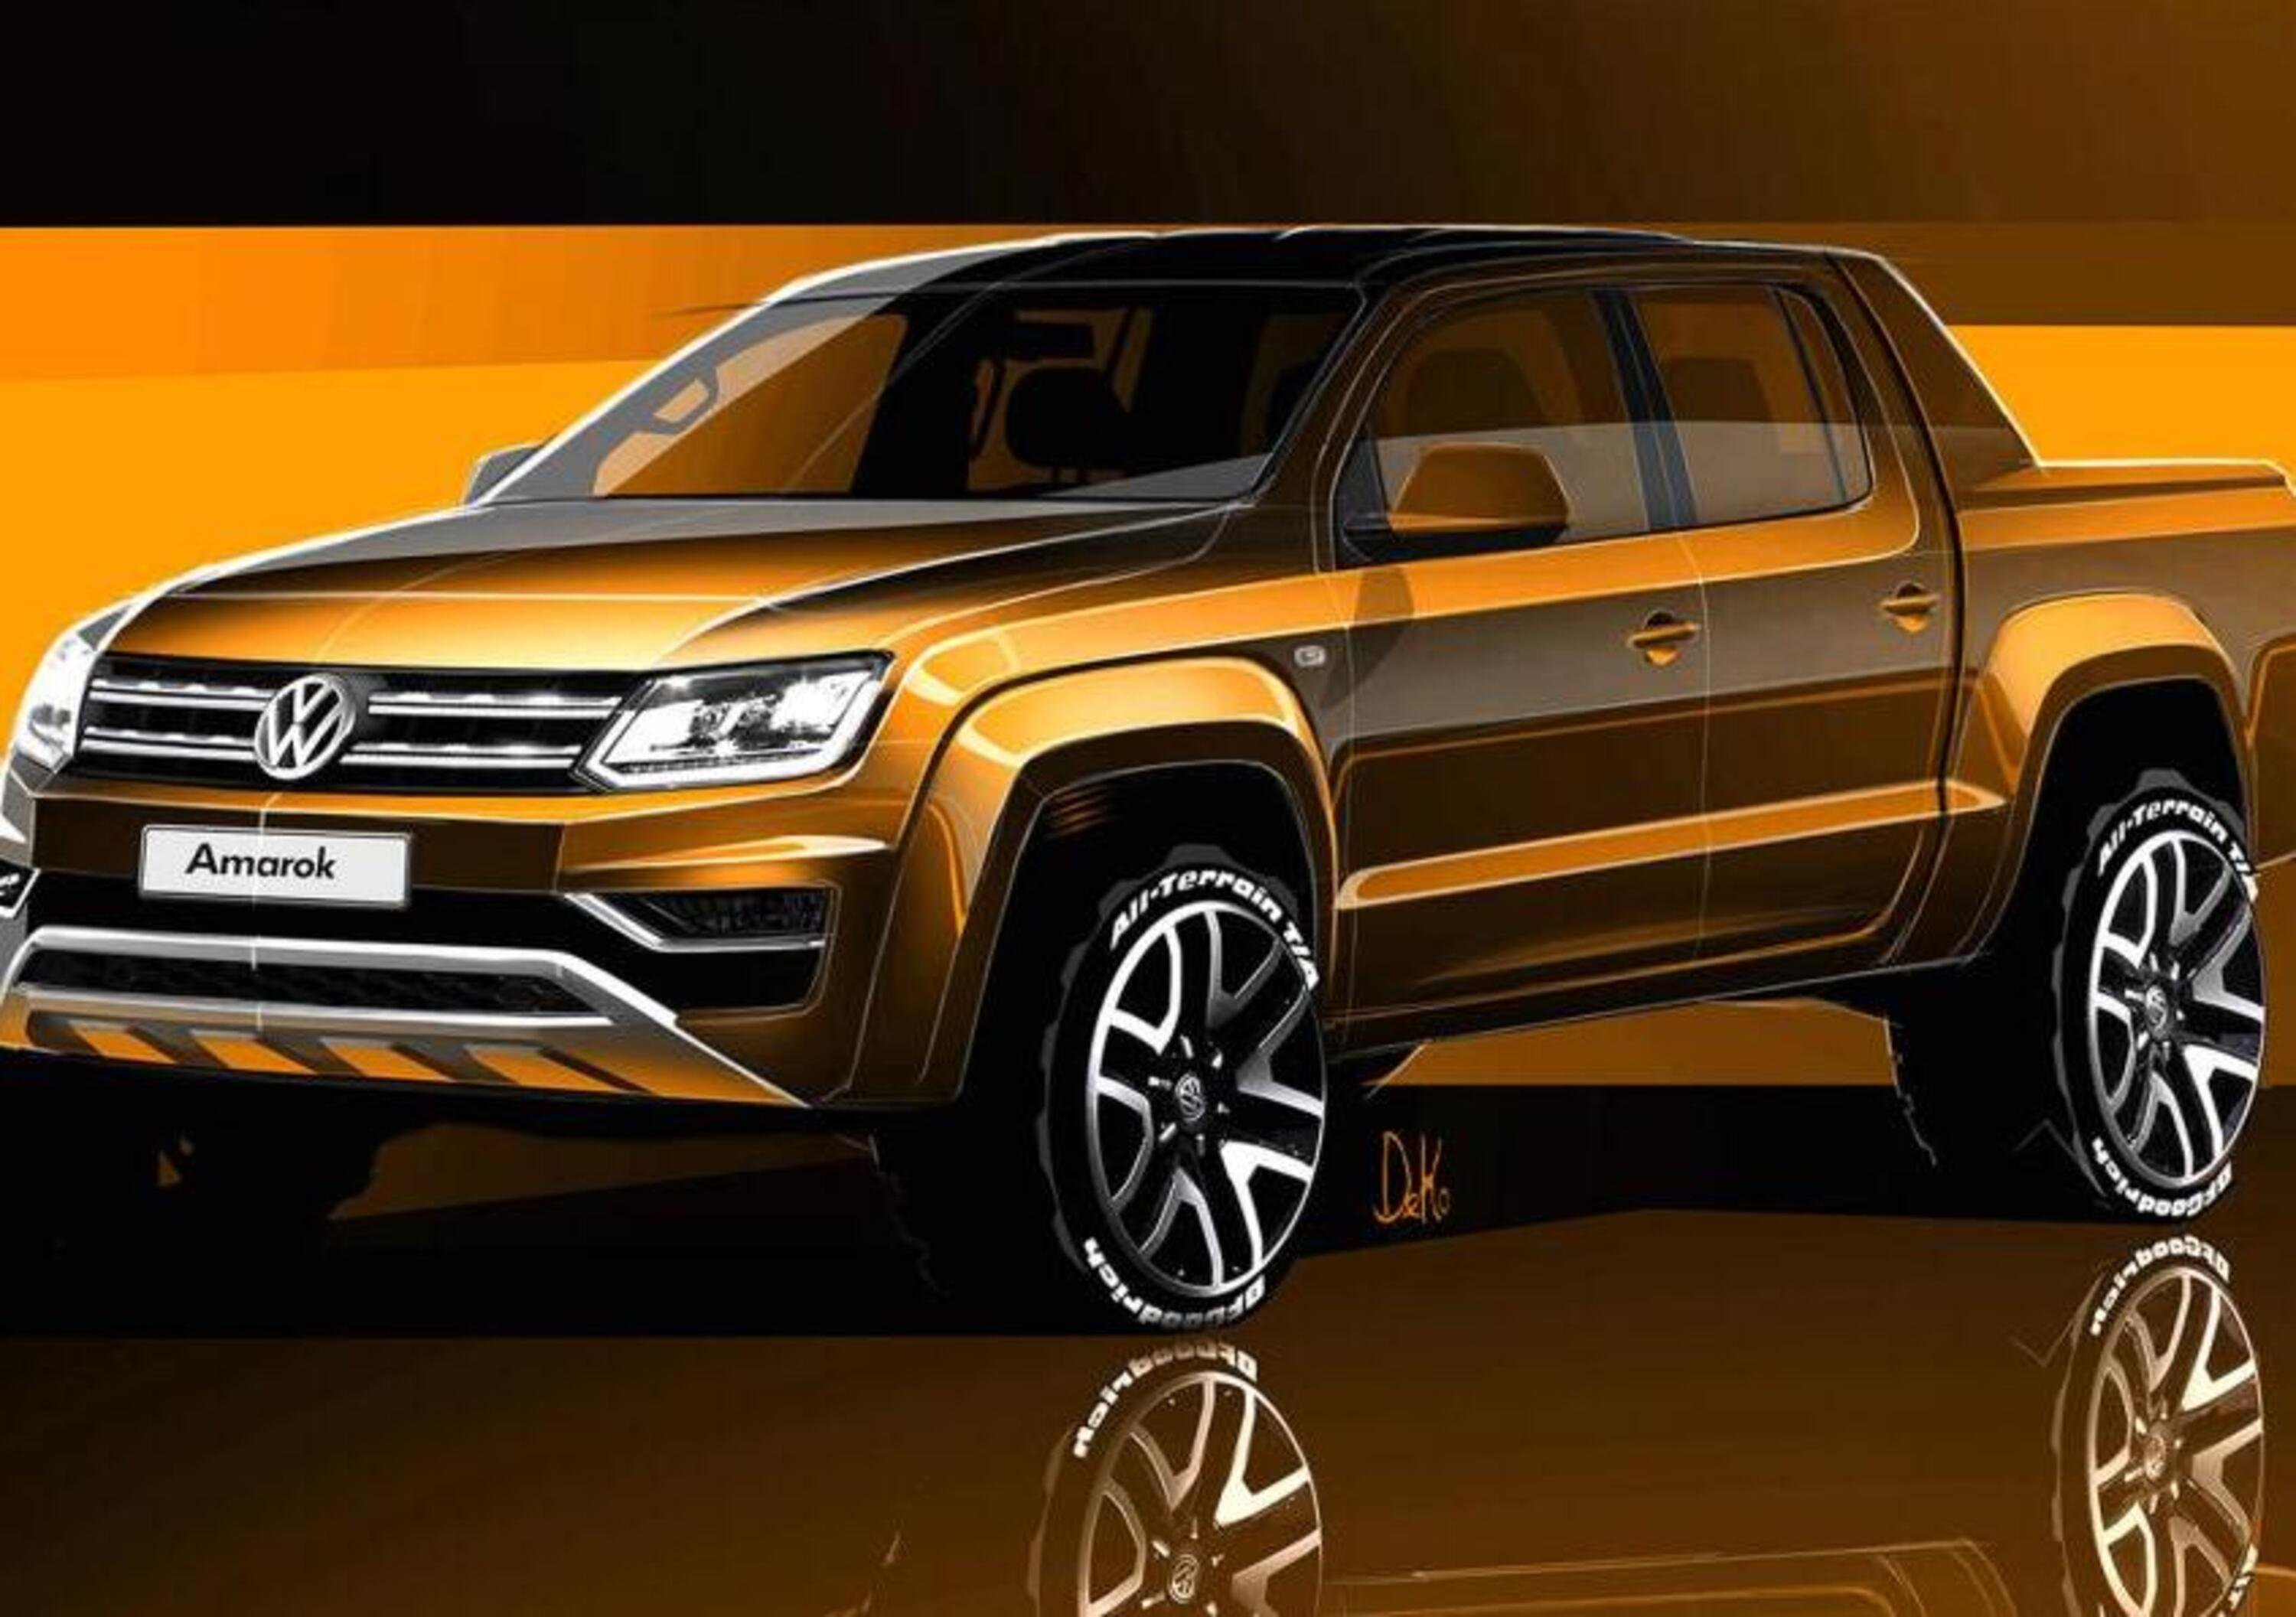 Volkswagen: accordo per costruire pick-up in Cina